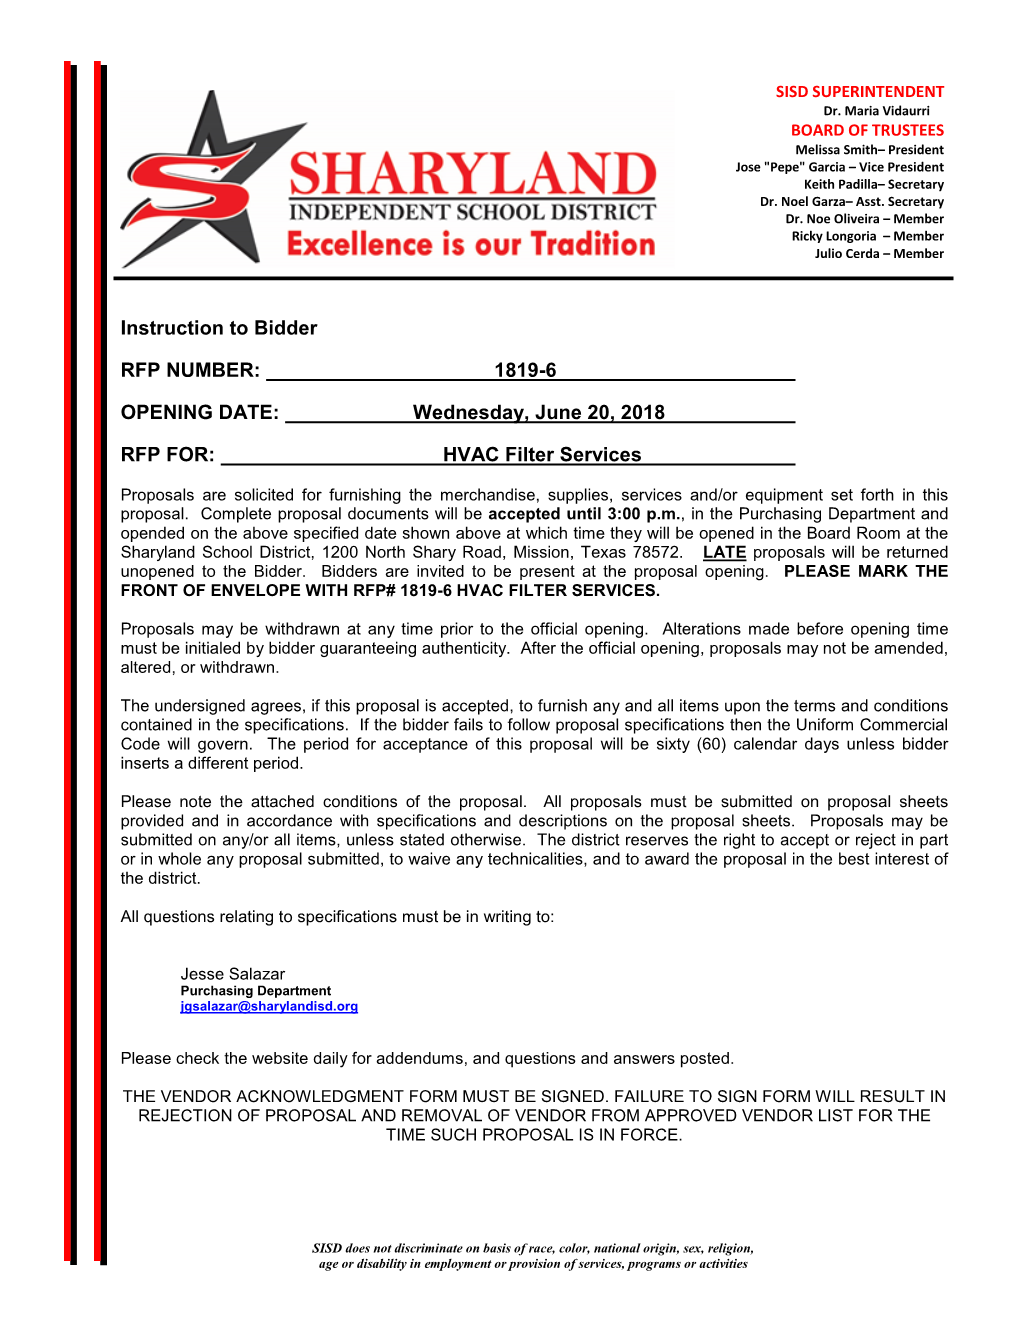 Sharyland Independent School District